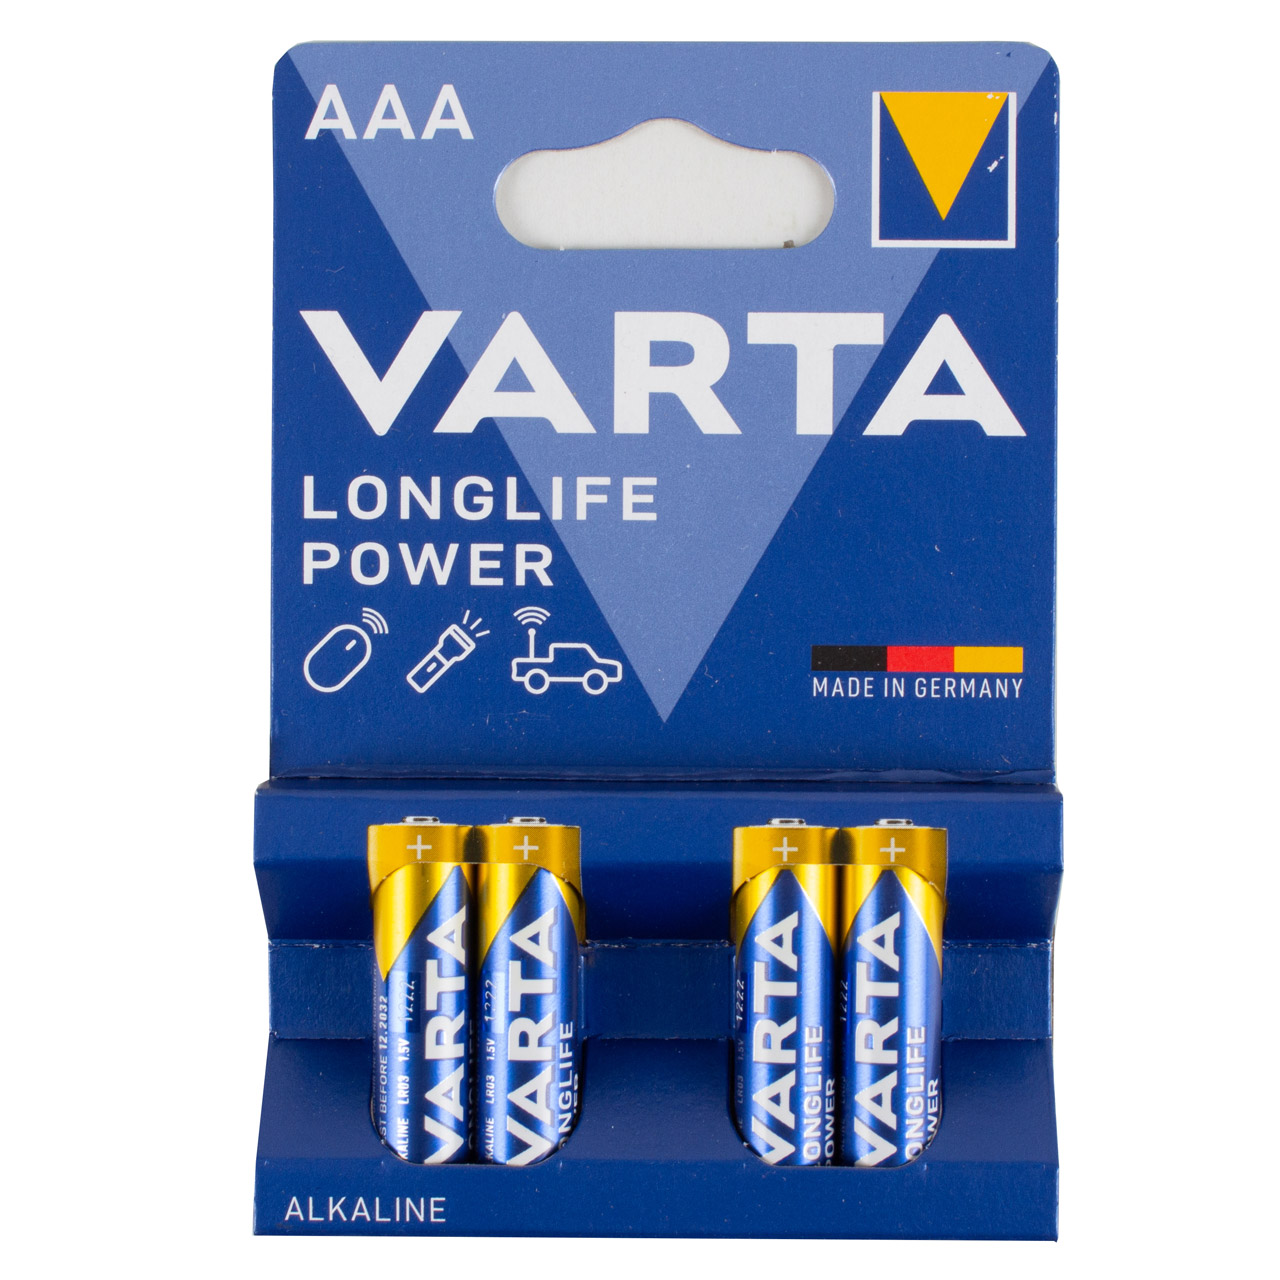 4x VARTA LONGLIFE POWER ALKALINE Batterie AAA MICRO 4903 LR03 MN2400 1,5V